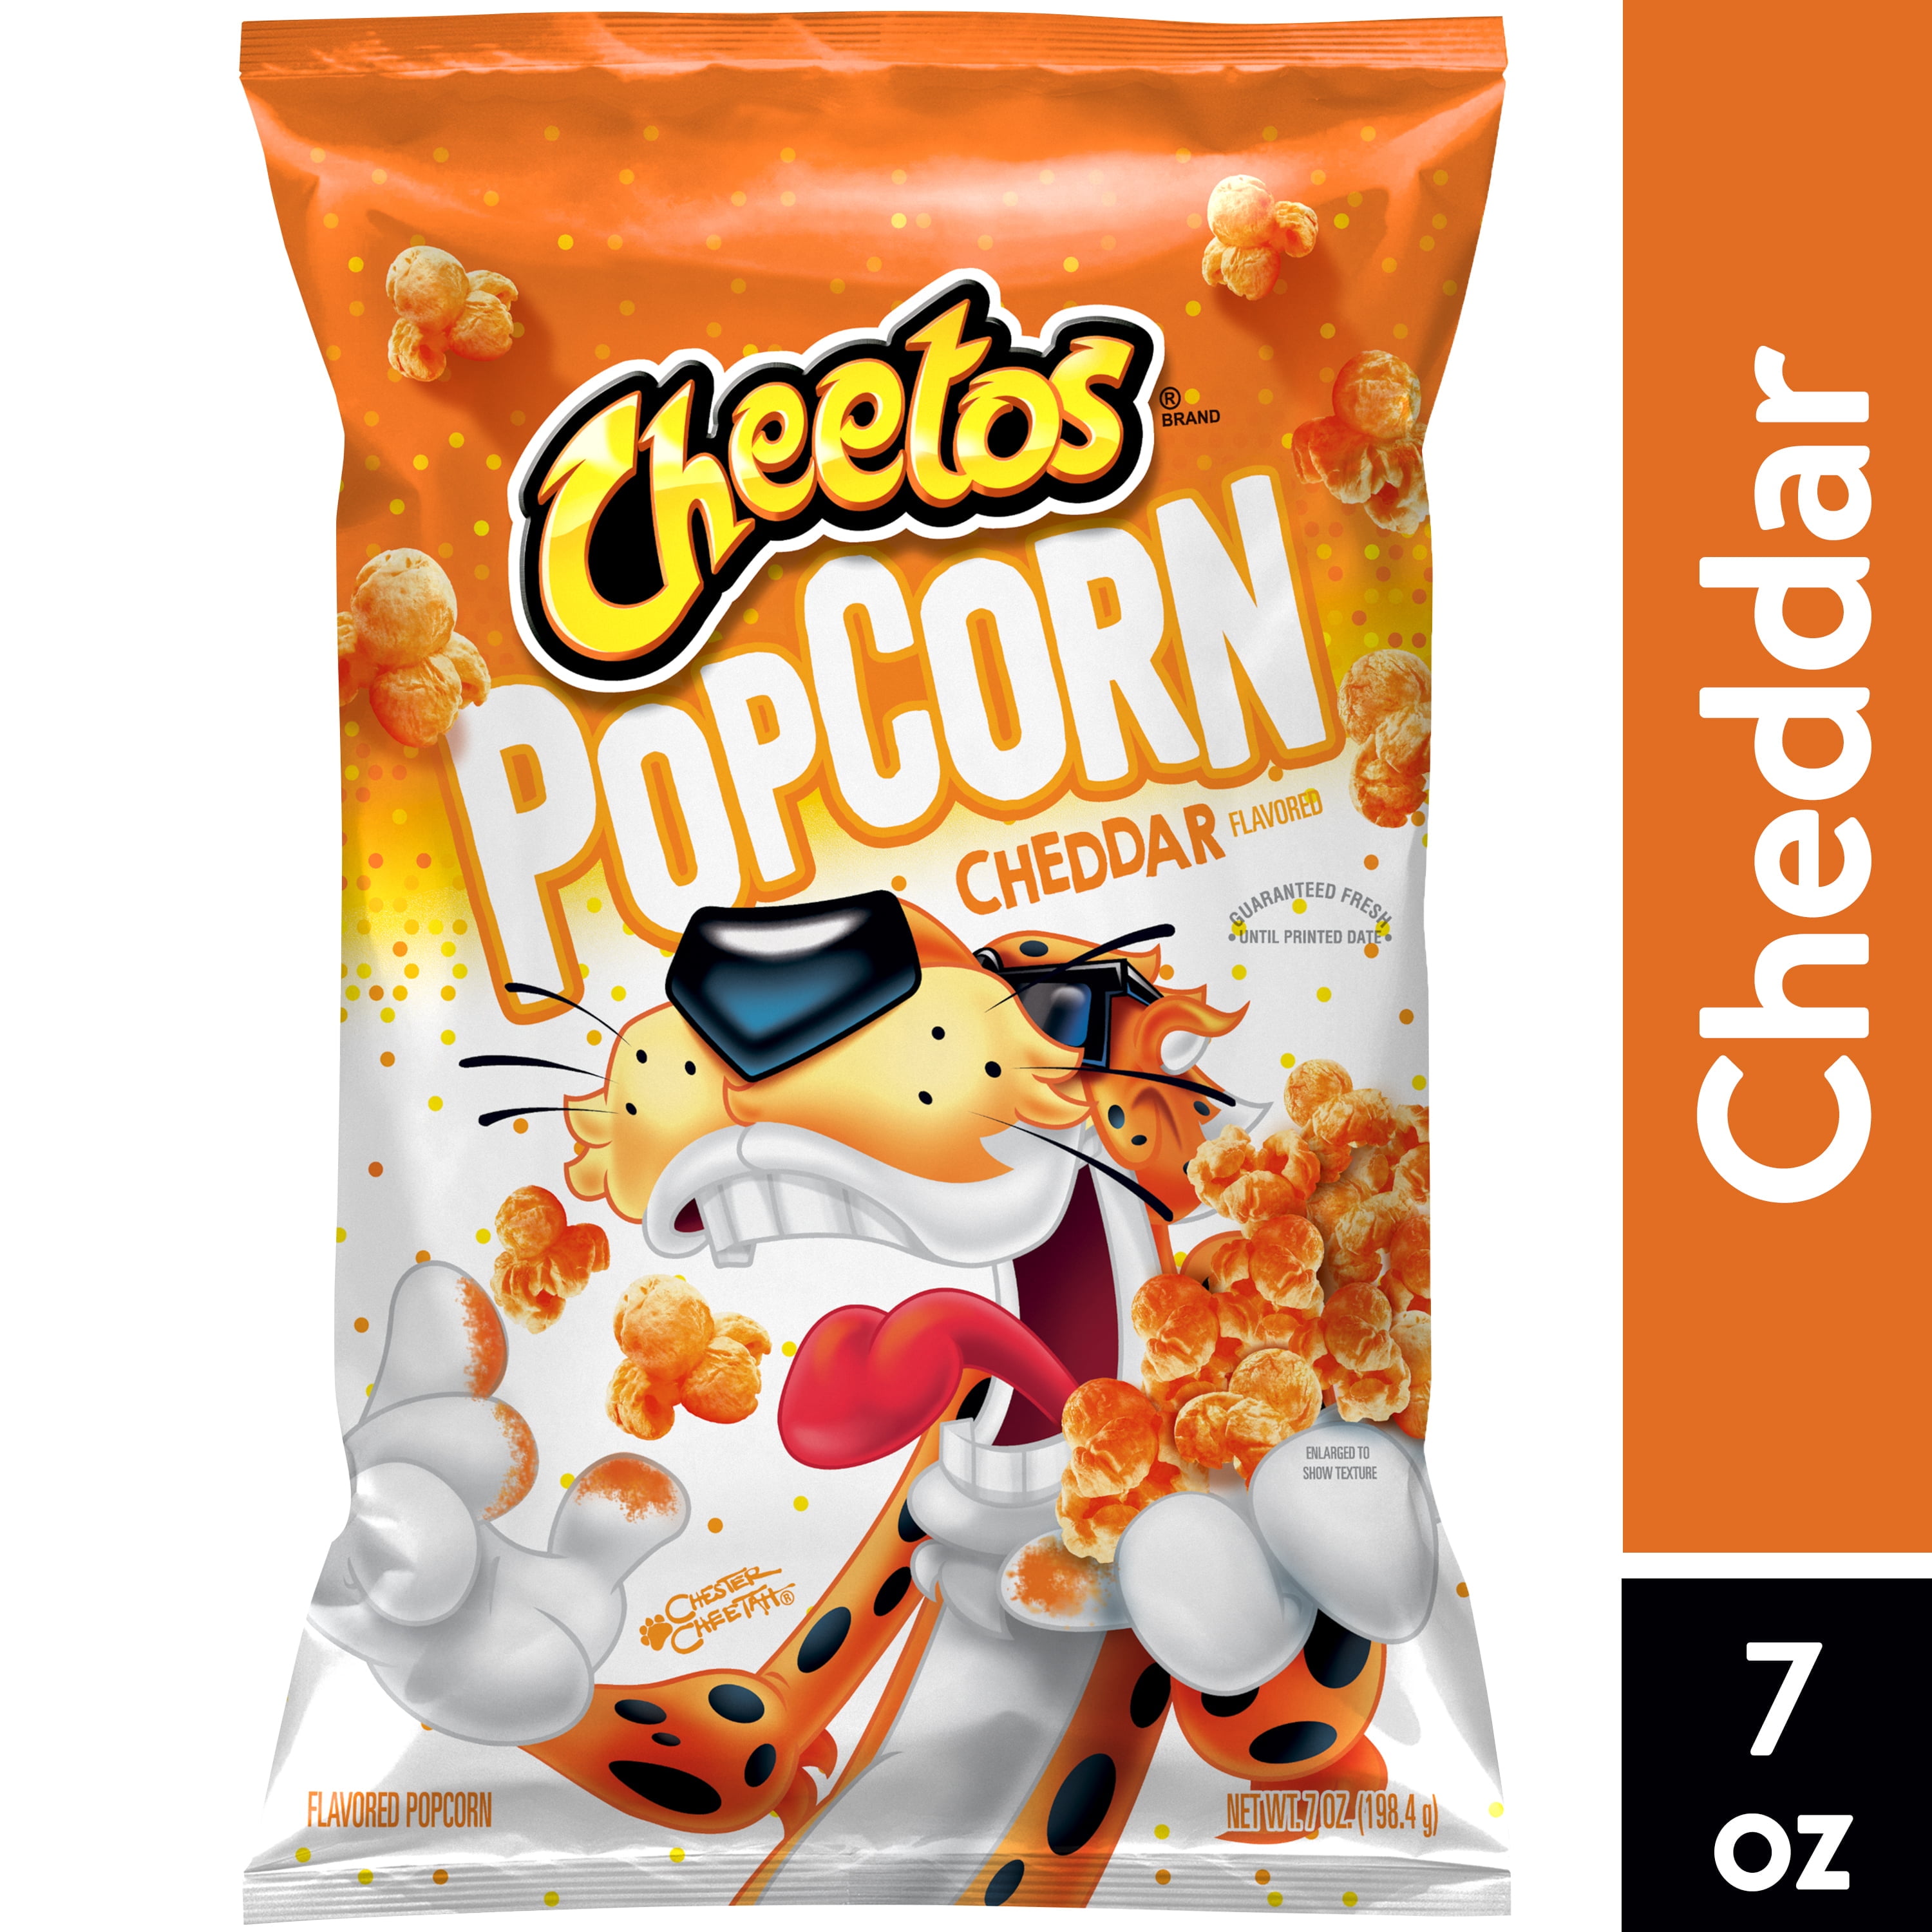 Cheetos Popcorn Flavored Popcorn Cheddar Flavored, 7 oz